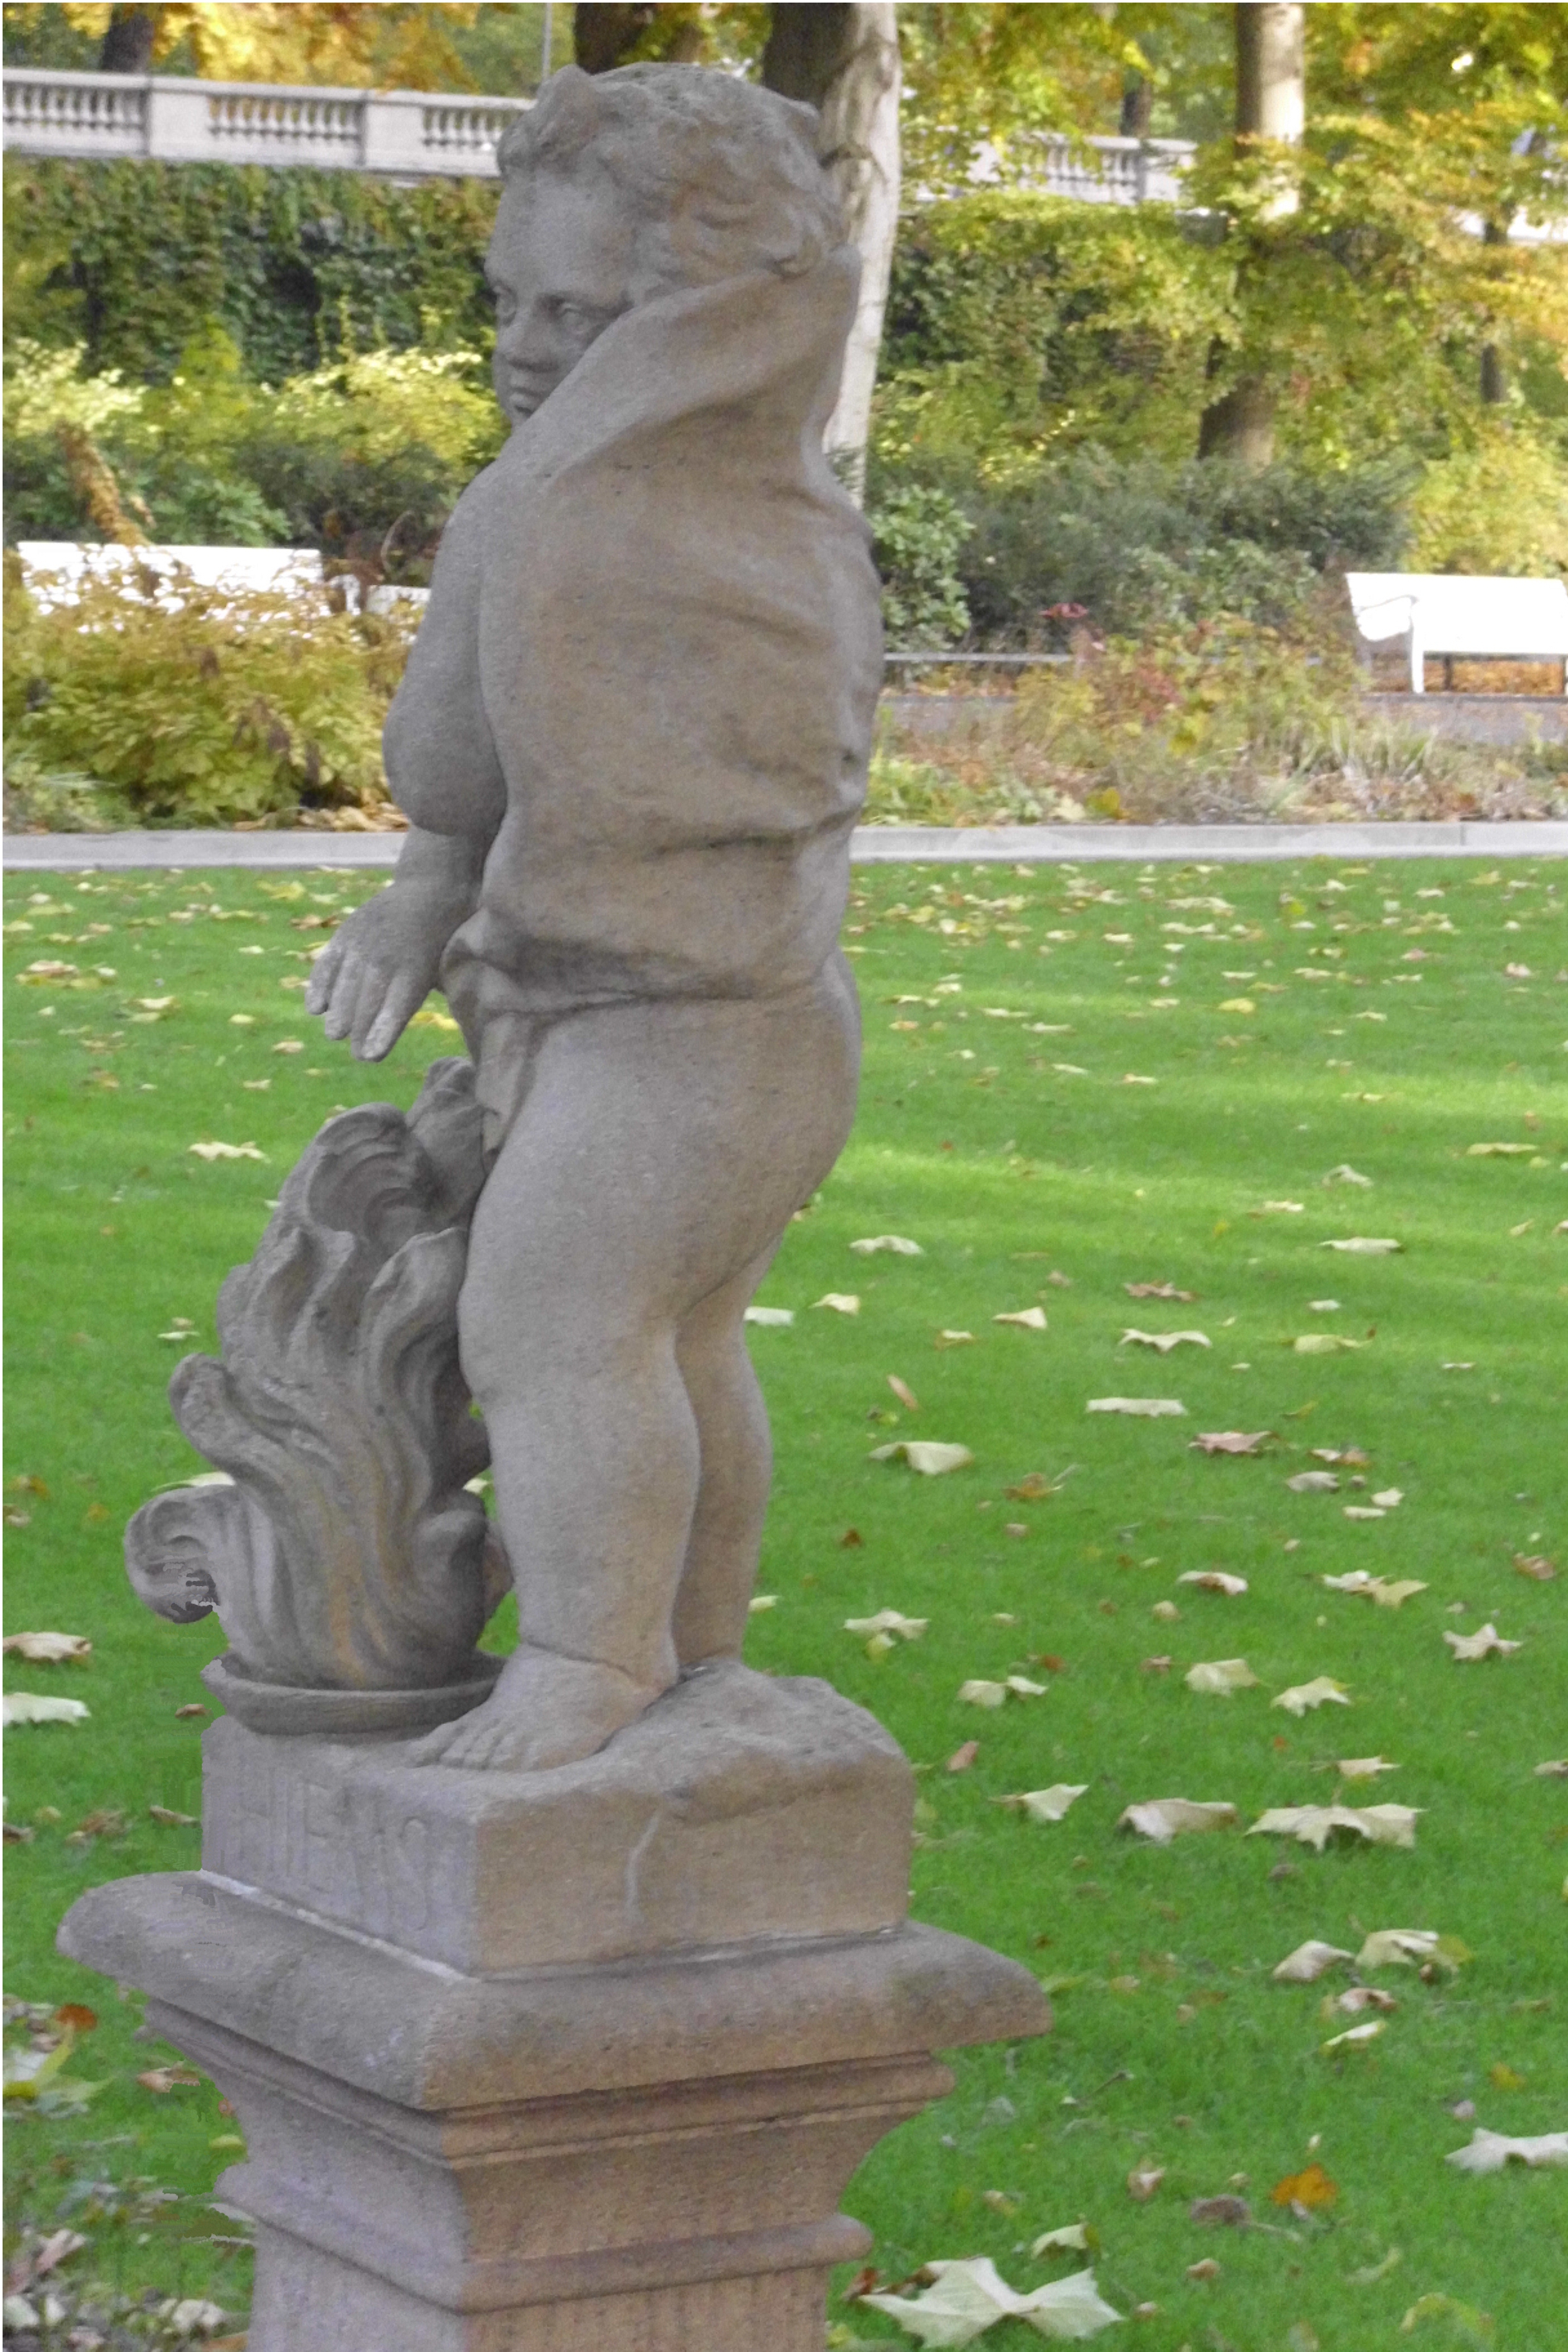 Farbfoto: Den Winter darstellende Statue im Körnerpark in Neukölln in Berlin im Oktober 2010. Foto: Erwin Thomasius.